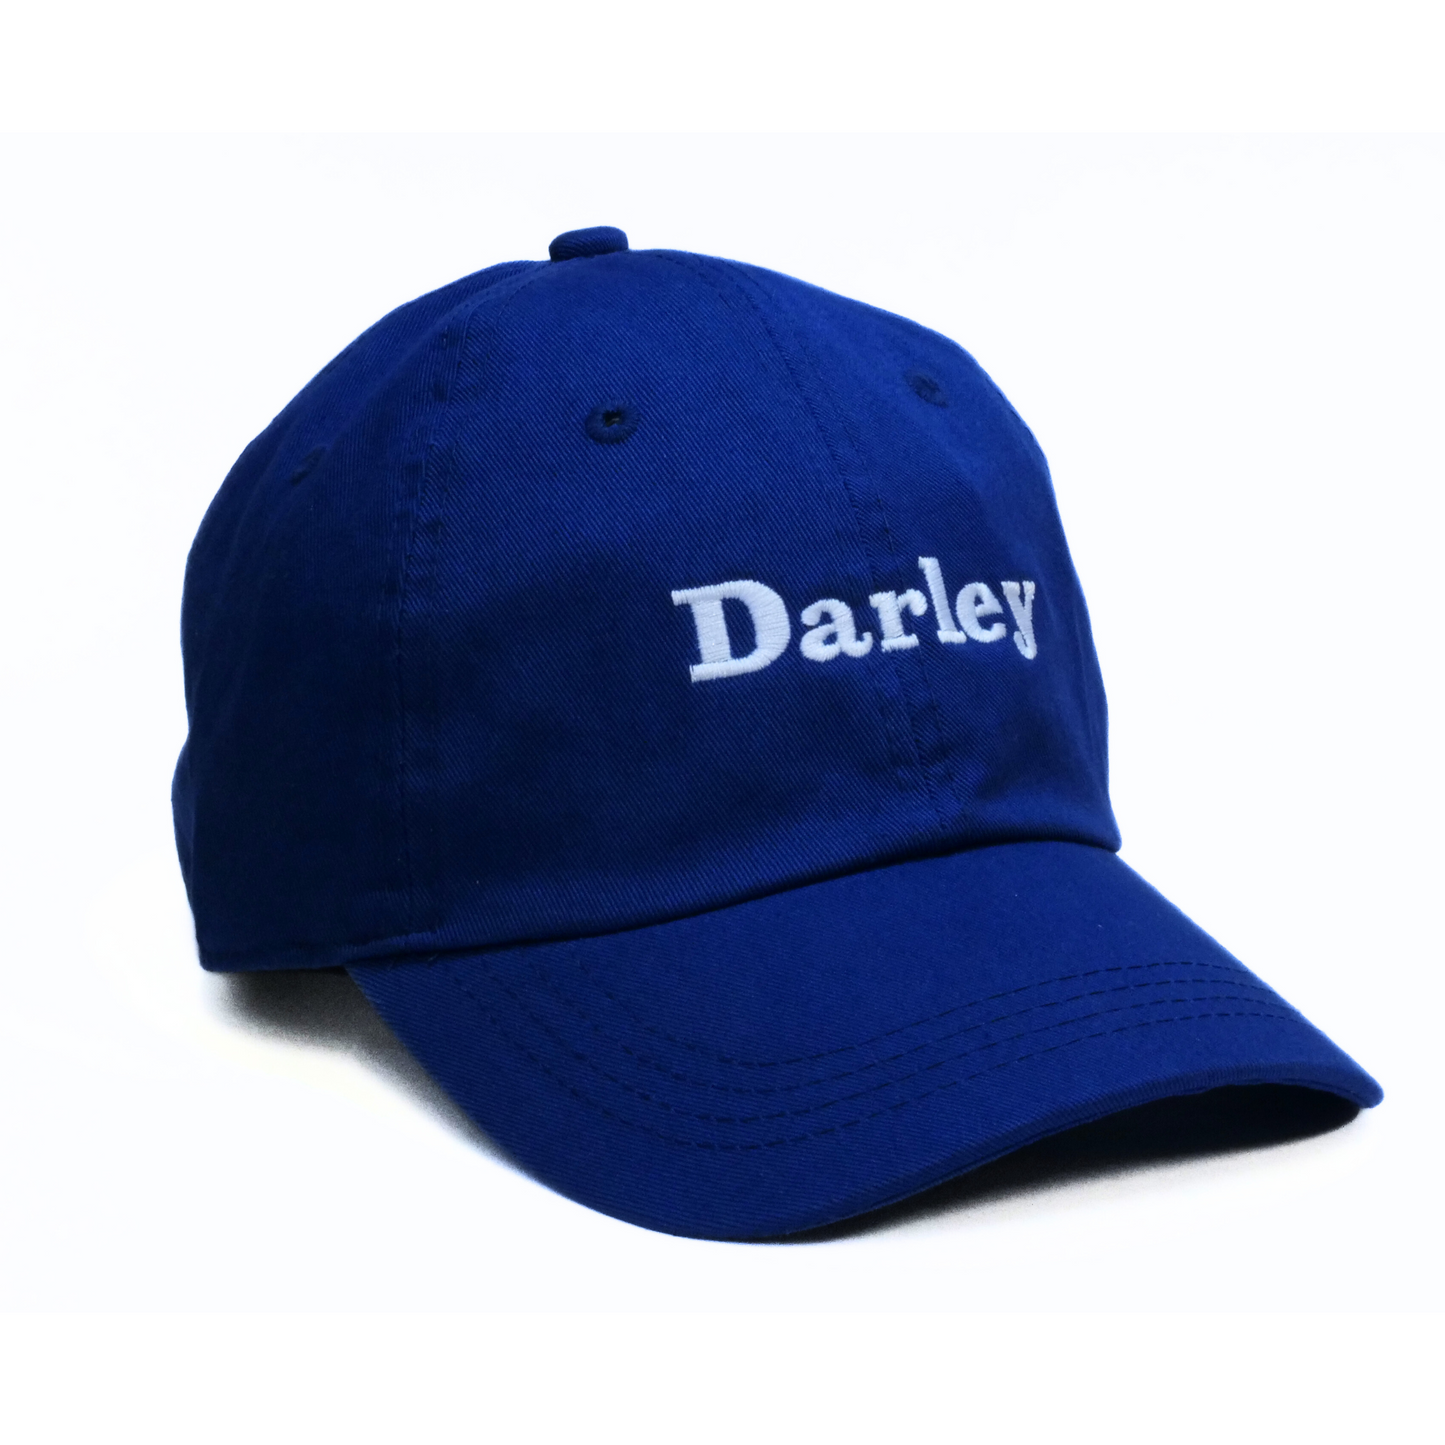 Darley Baseball Cap